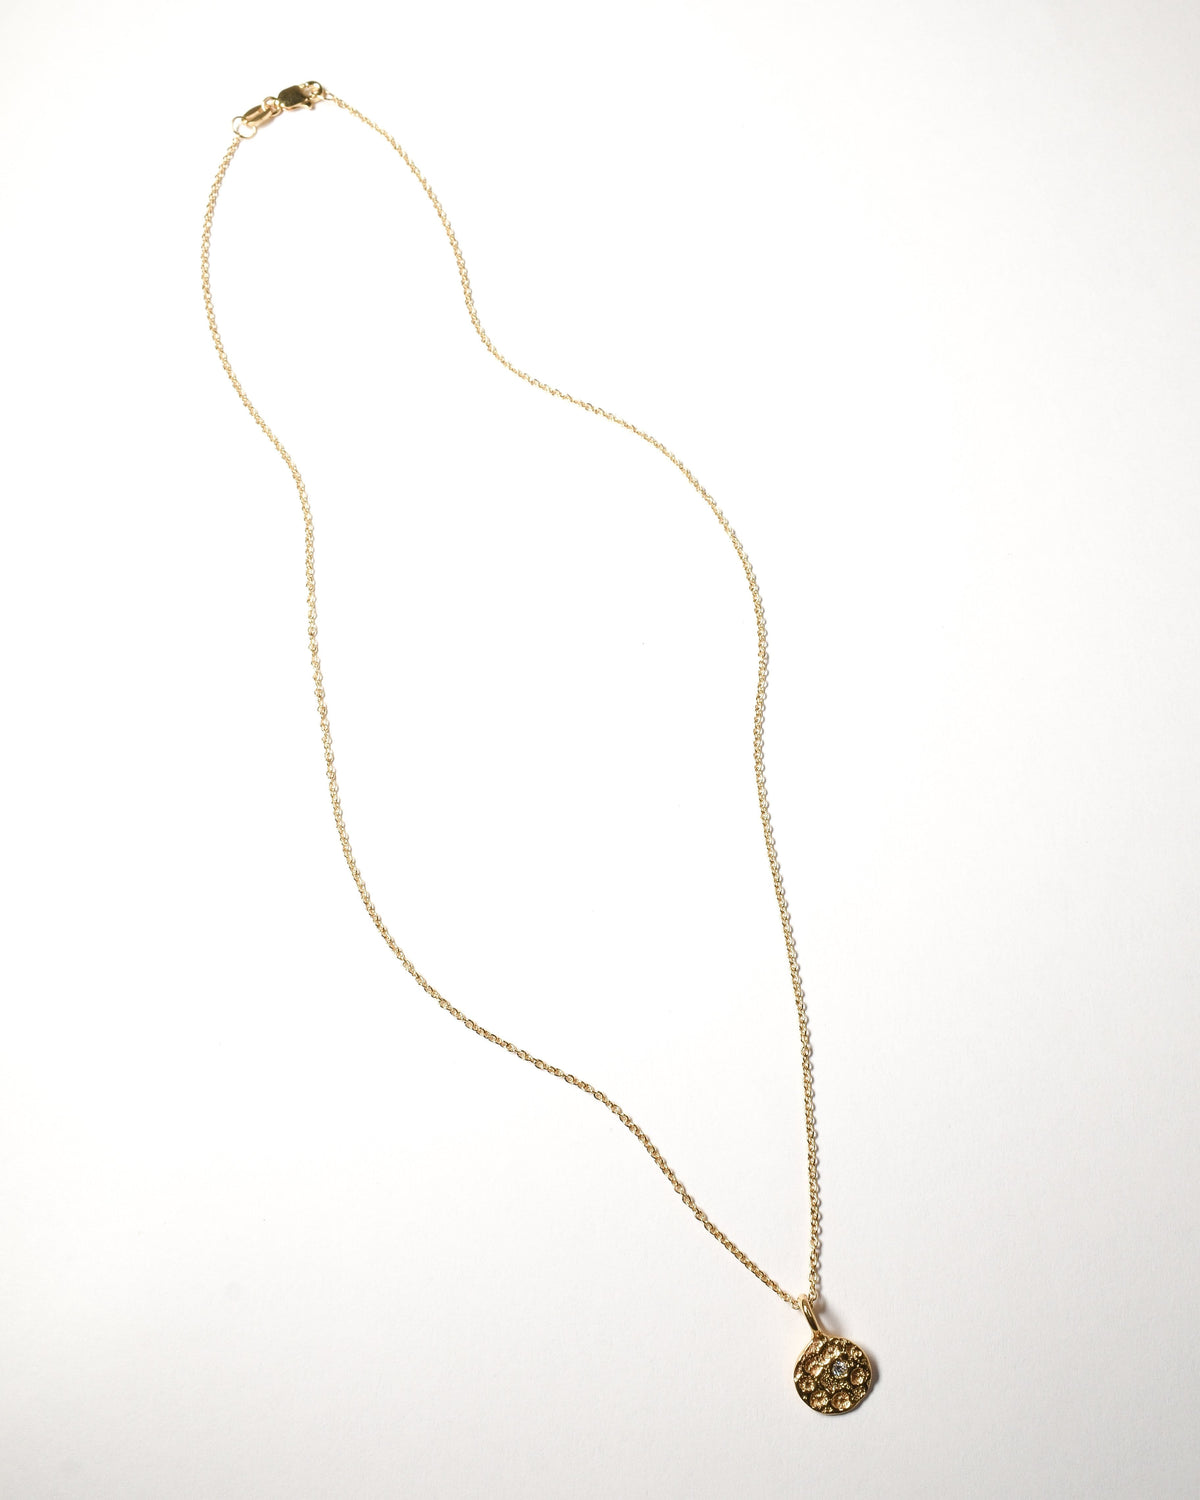 Diamond Birthstone Necklace - April - Yellow Gold